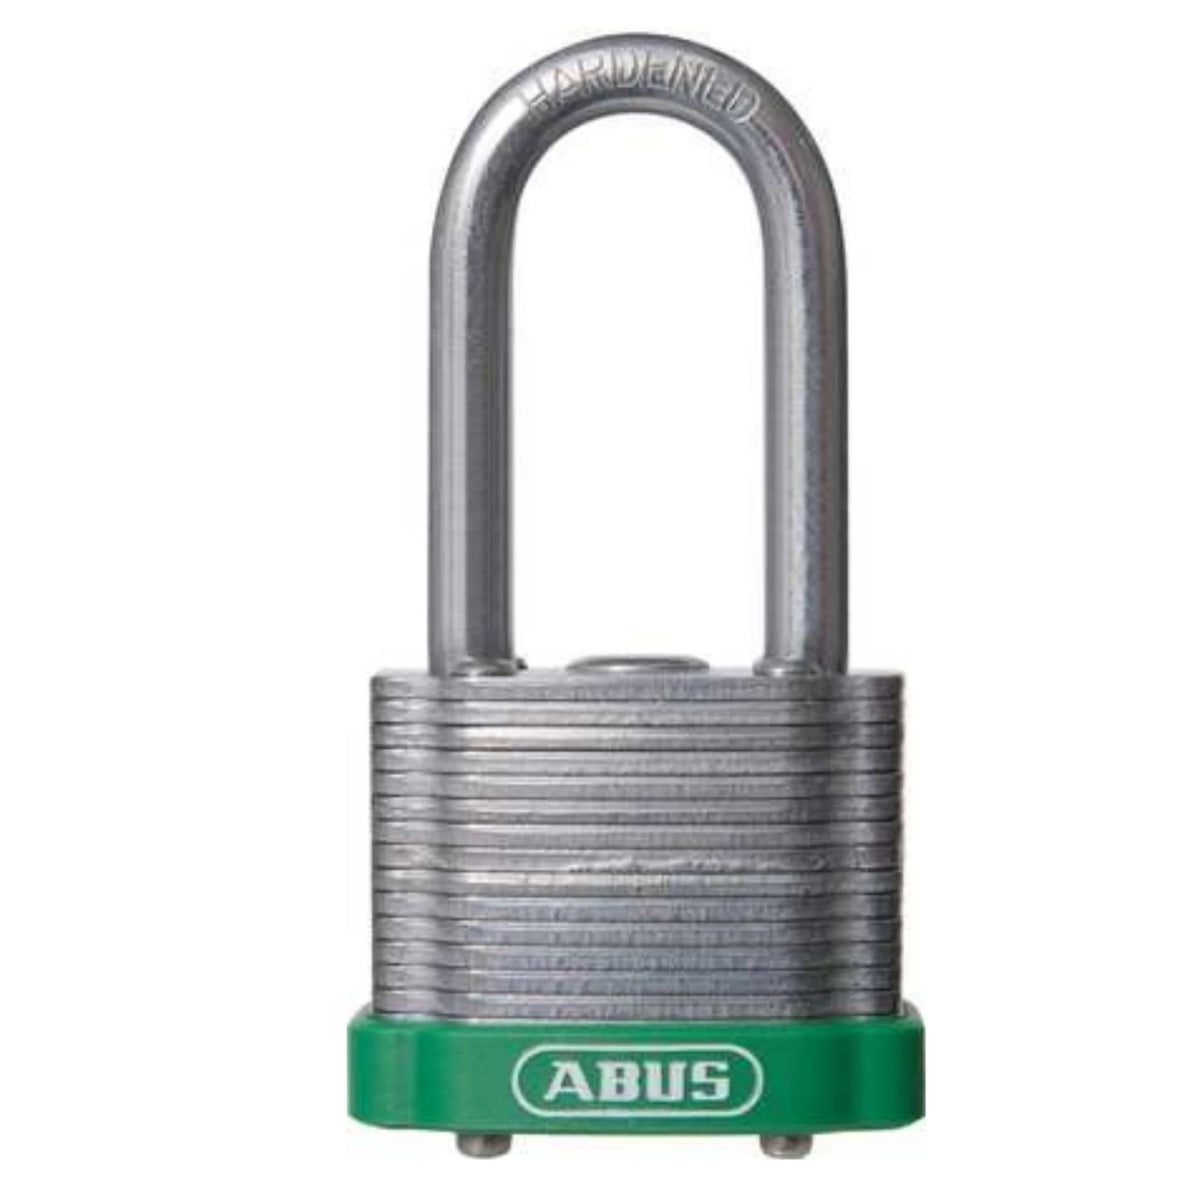 Abus 41/40HB50 Green Lock Laminated Steel Padlocks Keyed Alike (4140 KA), KD or MK Locks with 2-Inch Shackle - The Lock Source